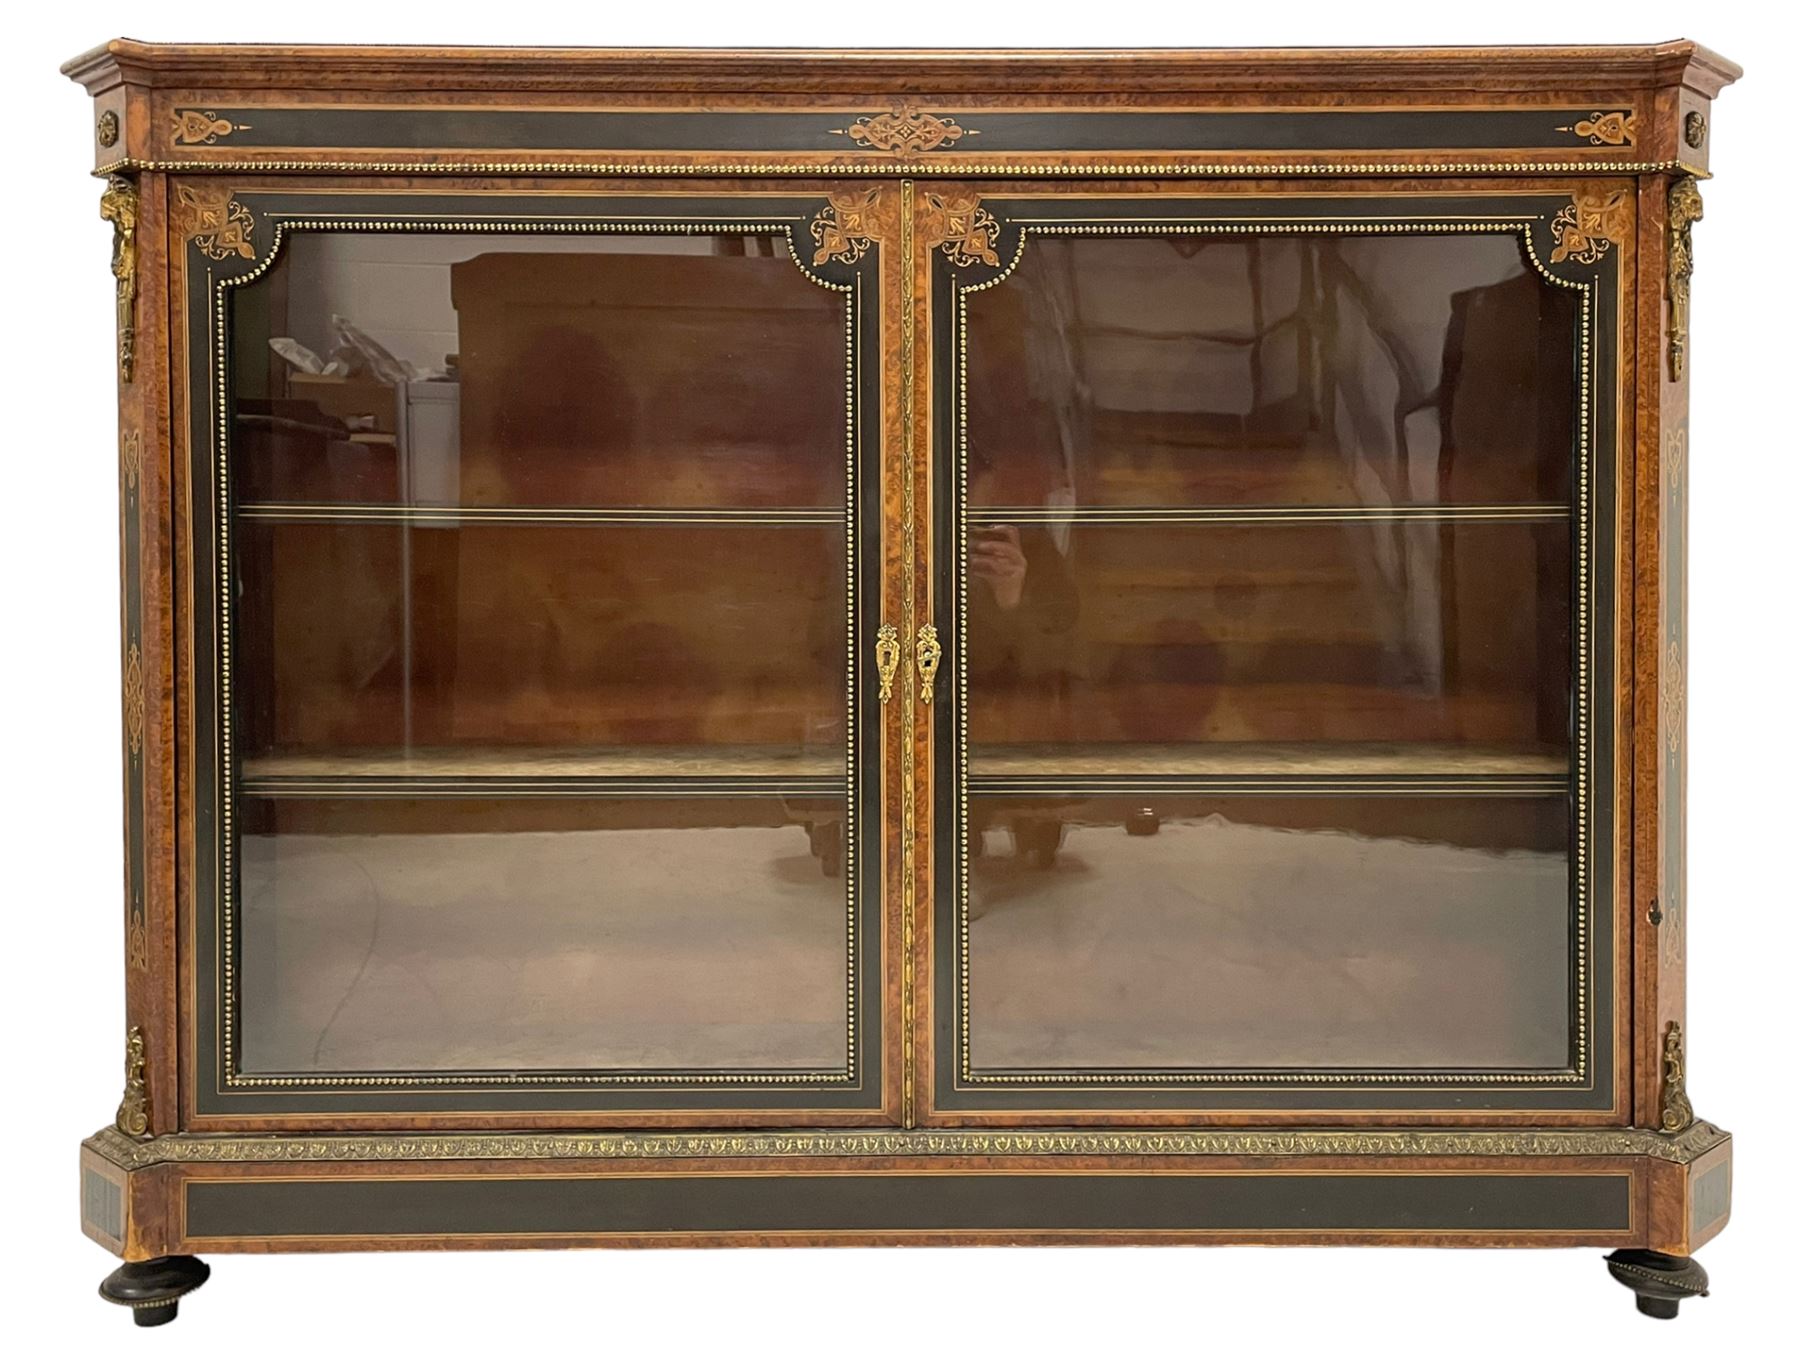 Victorian ebonised and amboyna wood credenza pier cabinet - Image 14 of 26